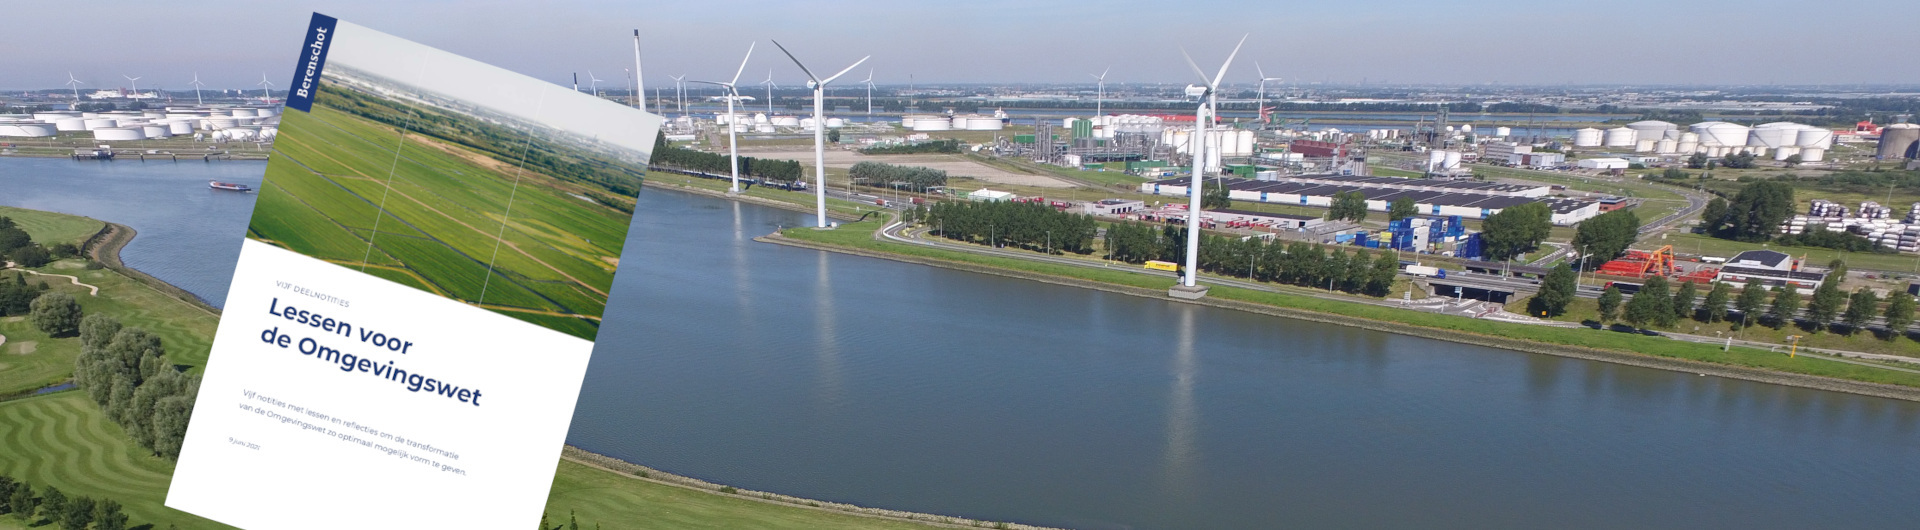 header-windmolen-industrie-waterweg-haven-2729467-cc-pictures-with-impact-pixabay